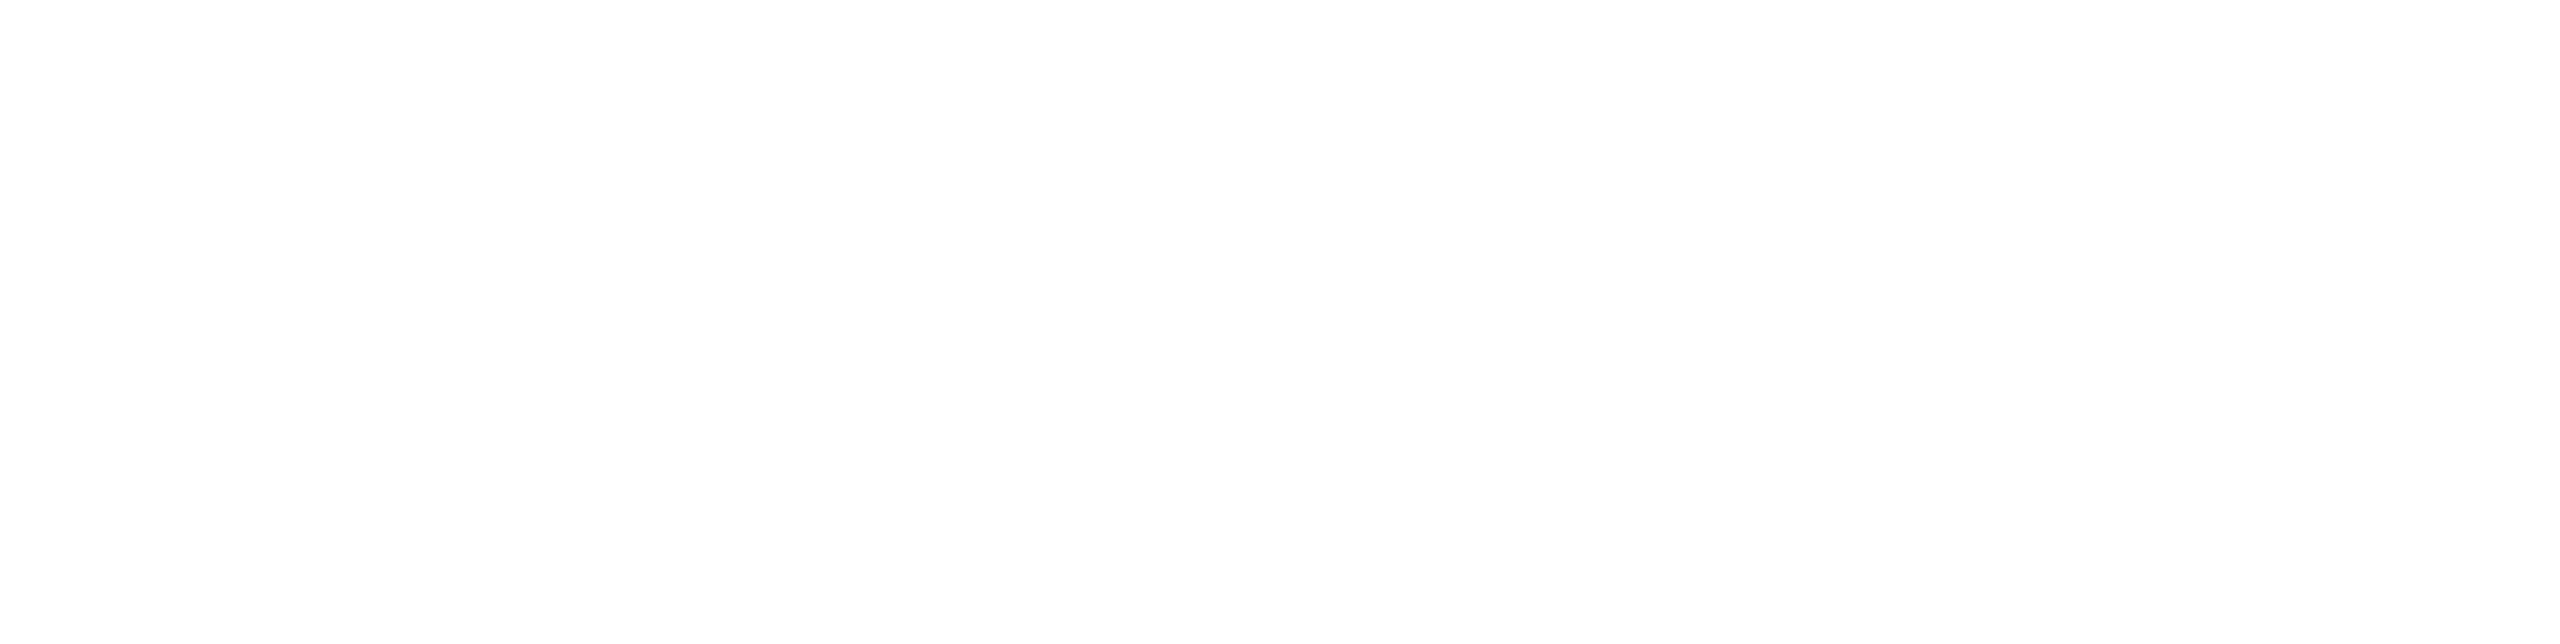 Reeds logo transparent